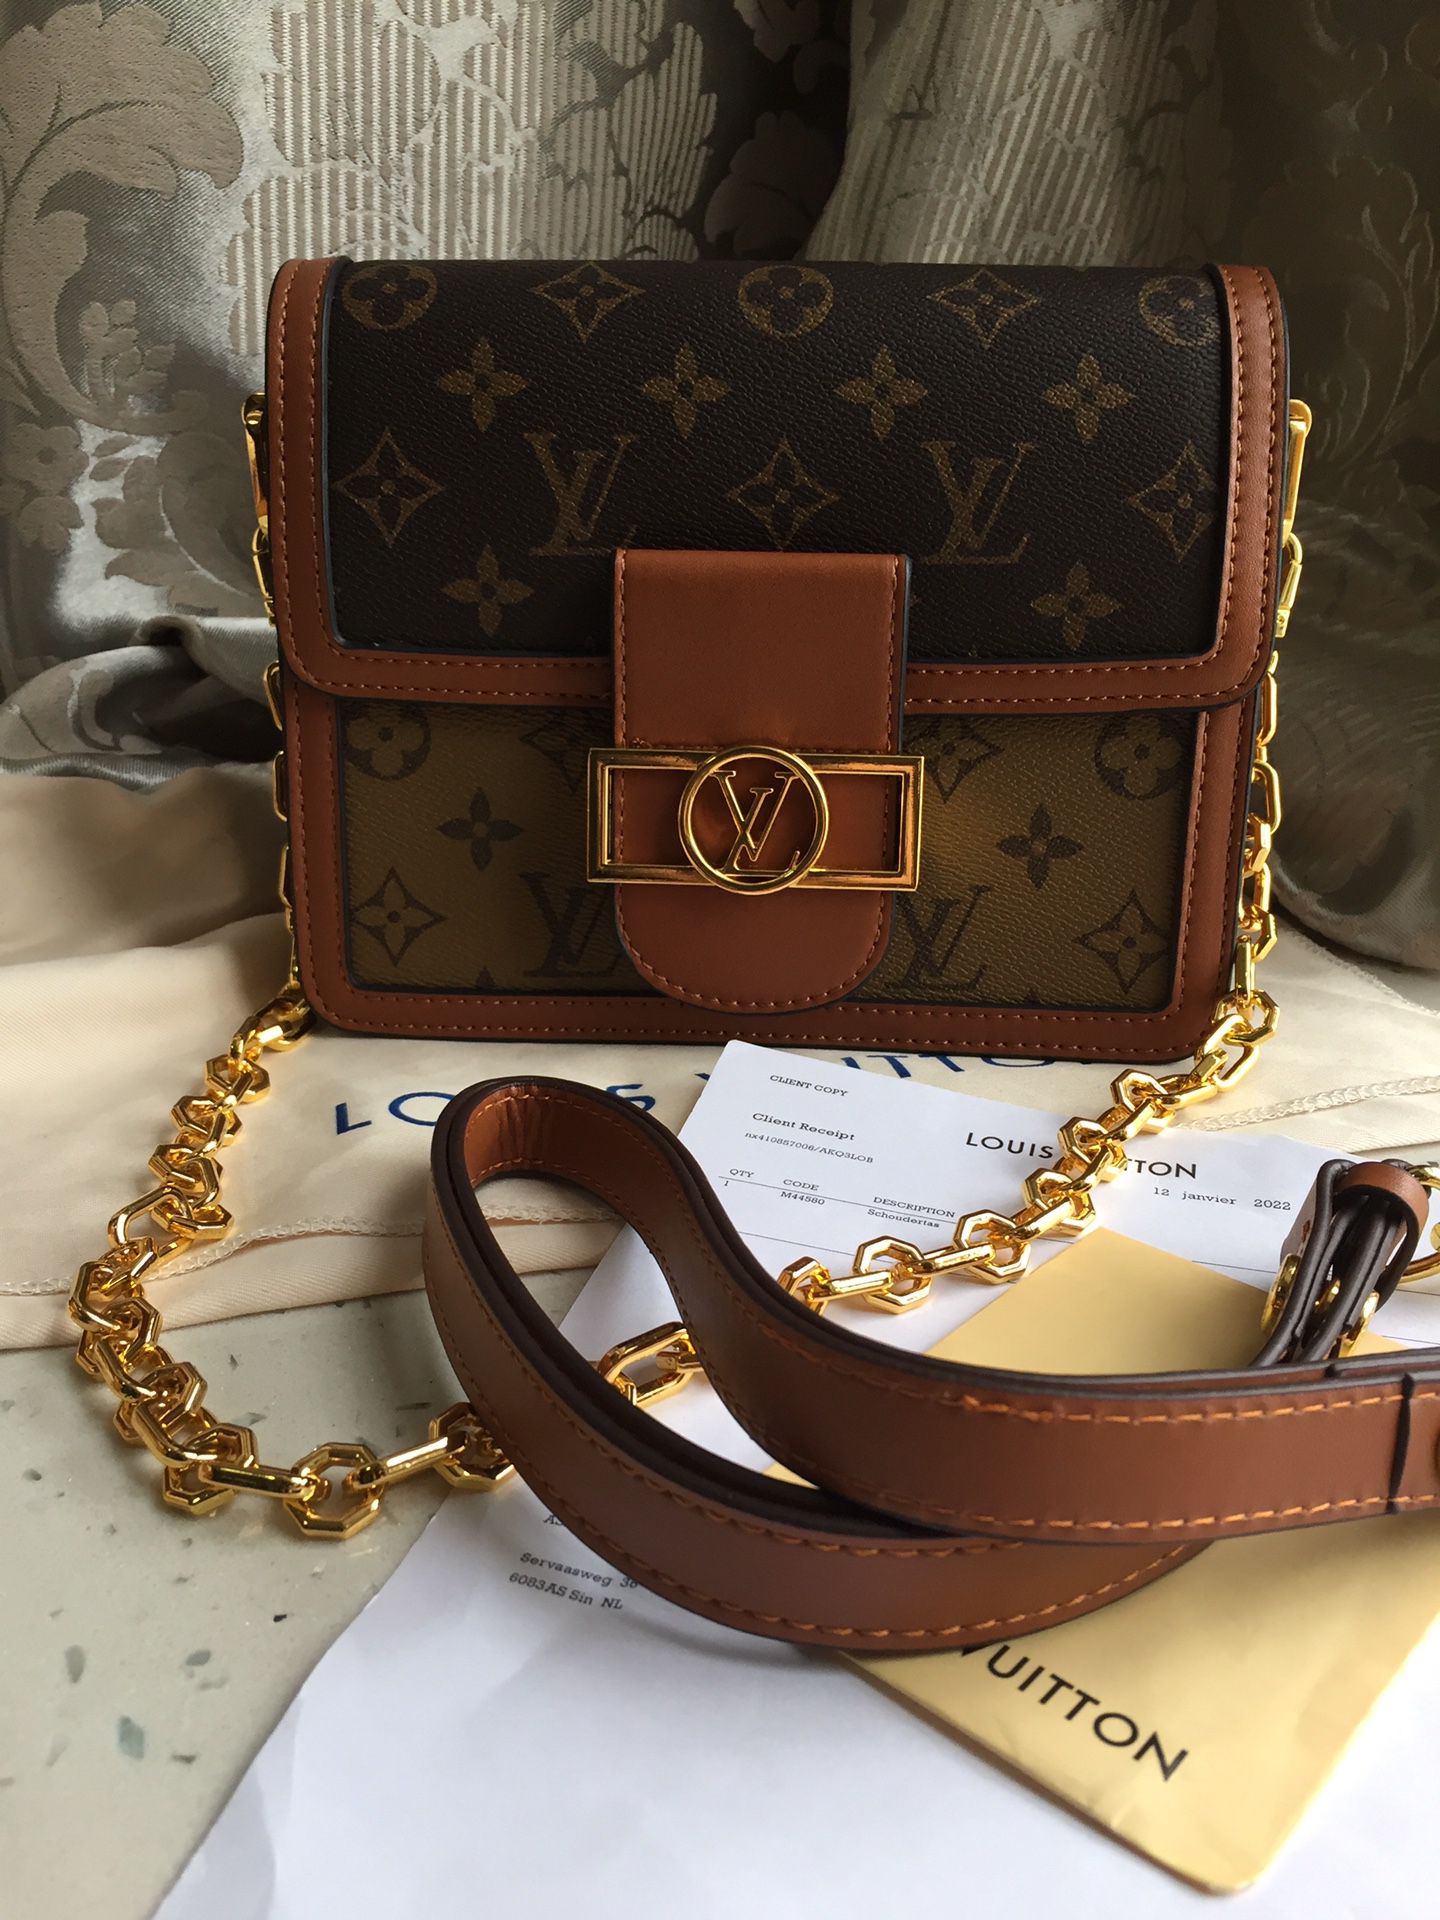 Authentic Louis Vuitton Bags Women's Cowhide Handbag Gift for